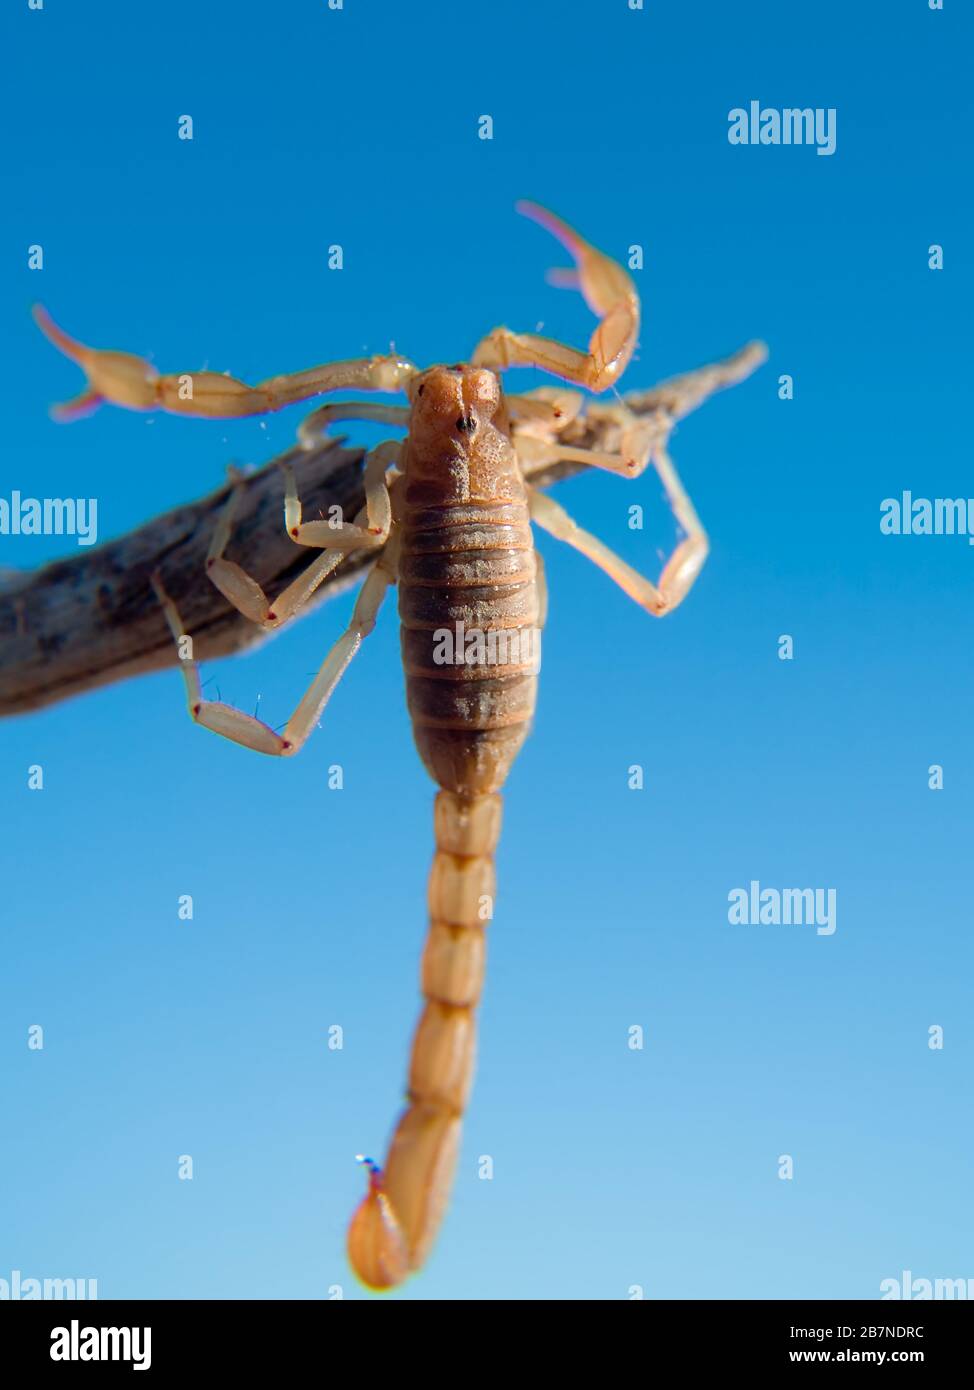 A Scorpion native to Arizona hanging onto a stick. Stock Photo